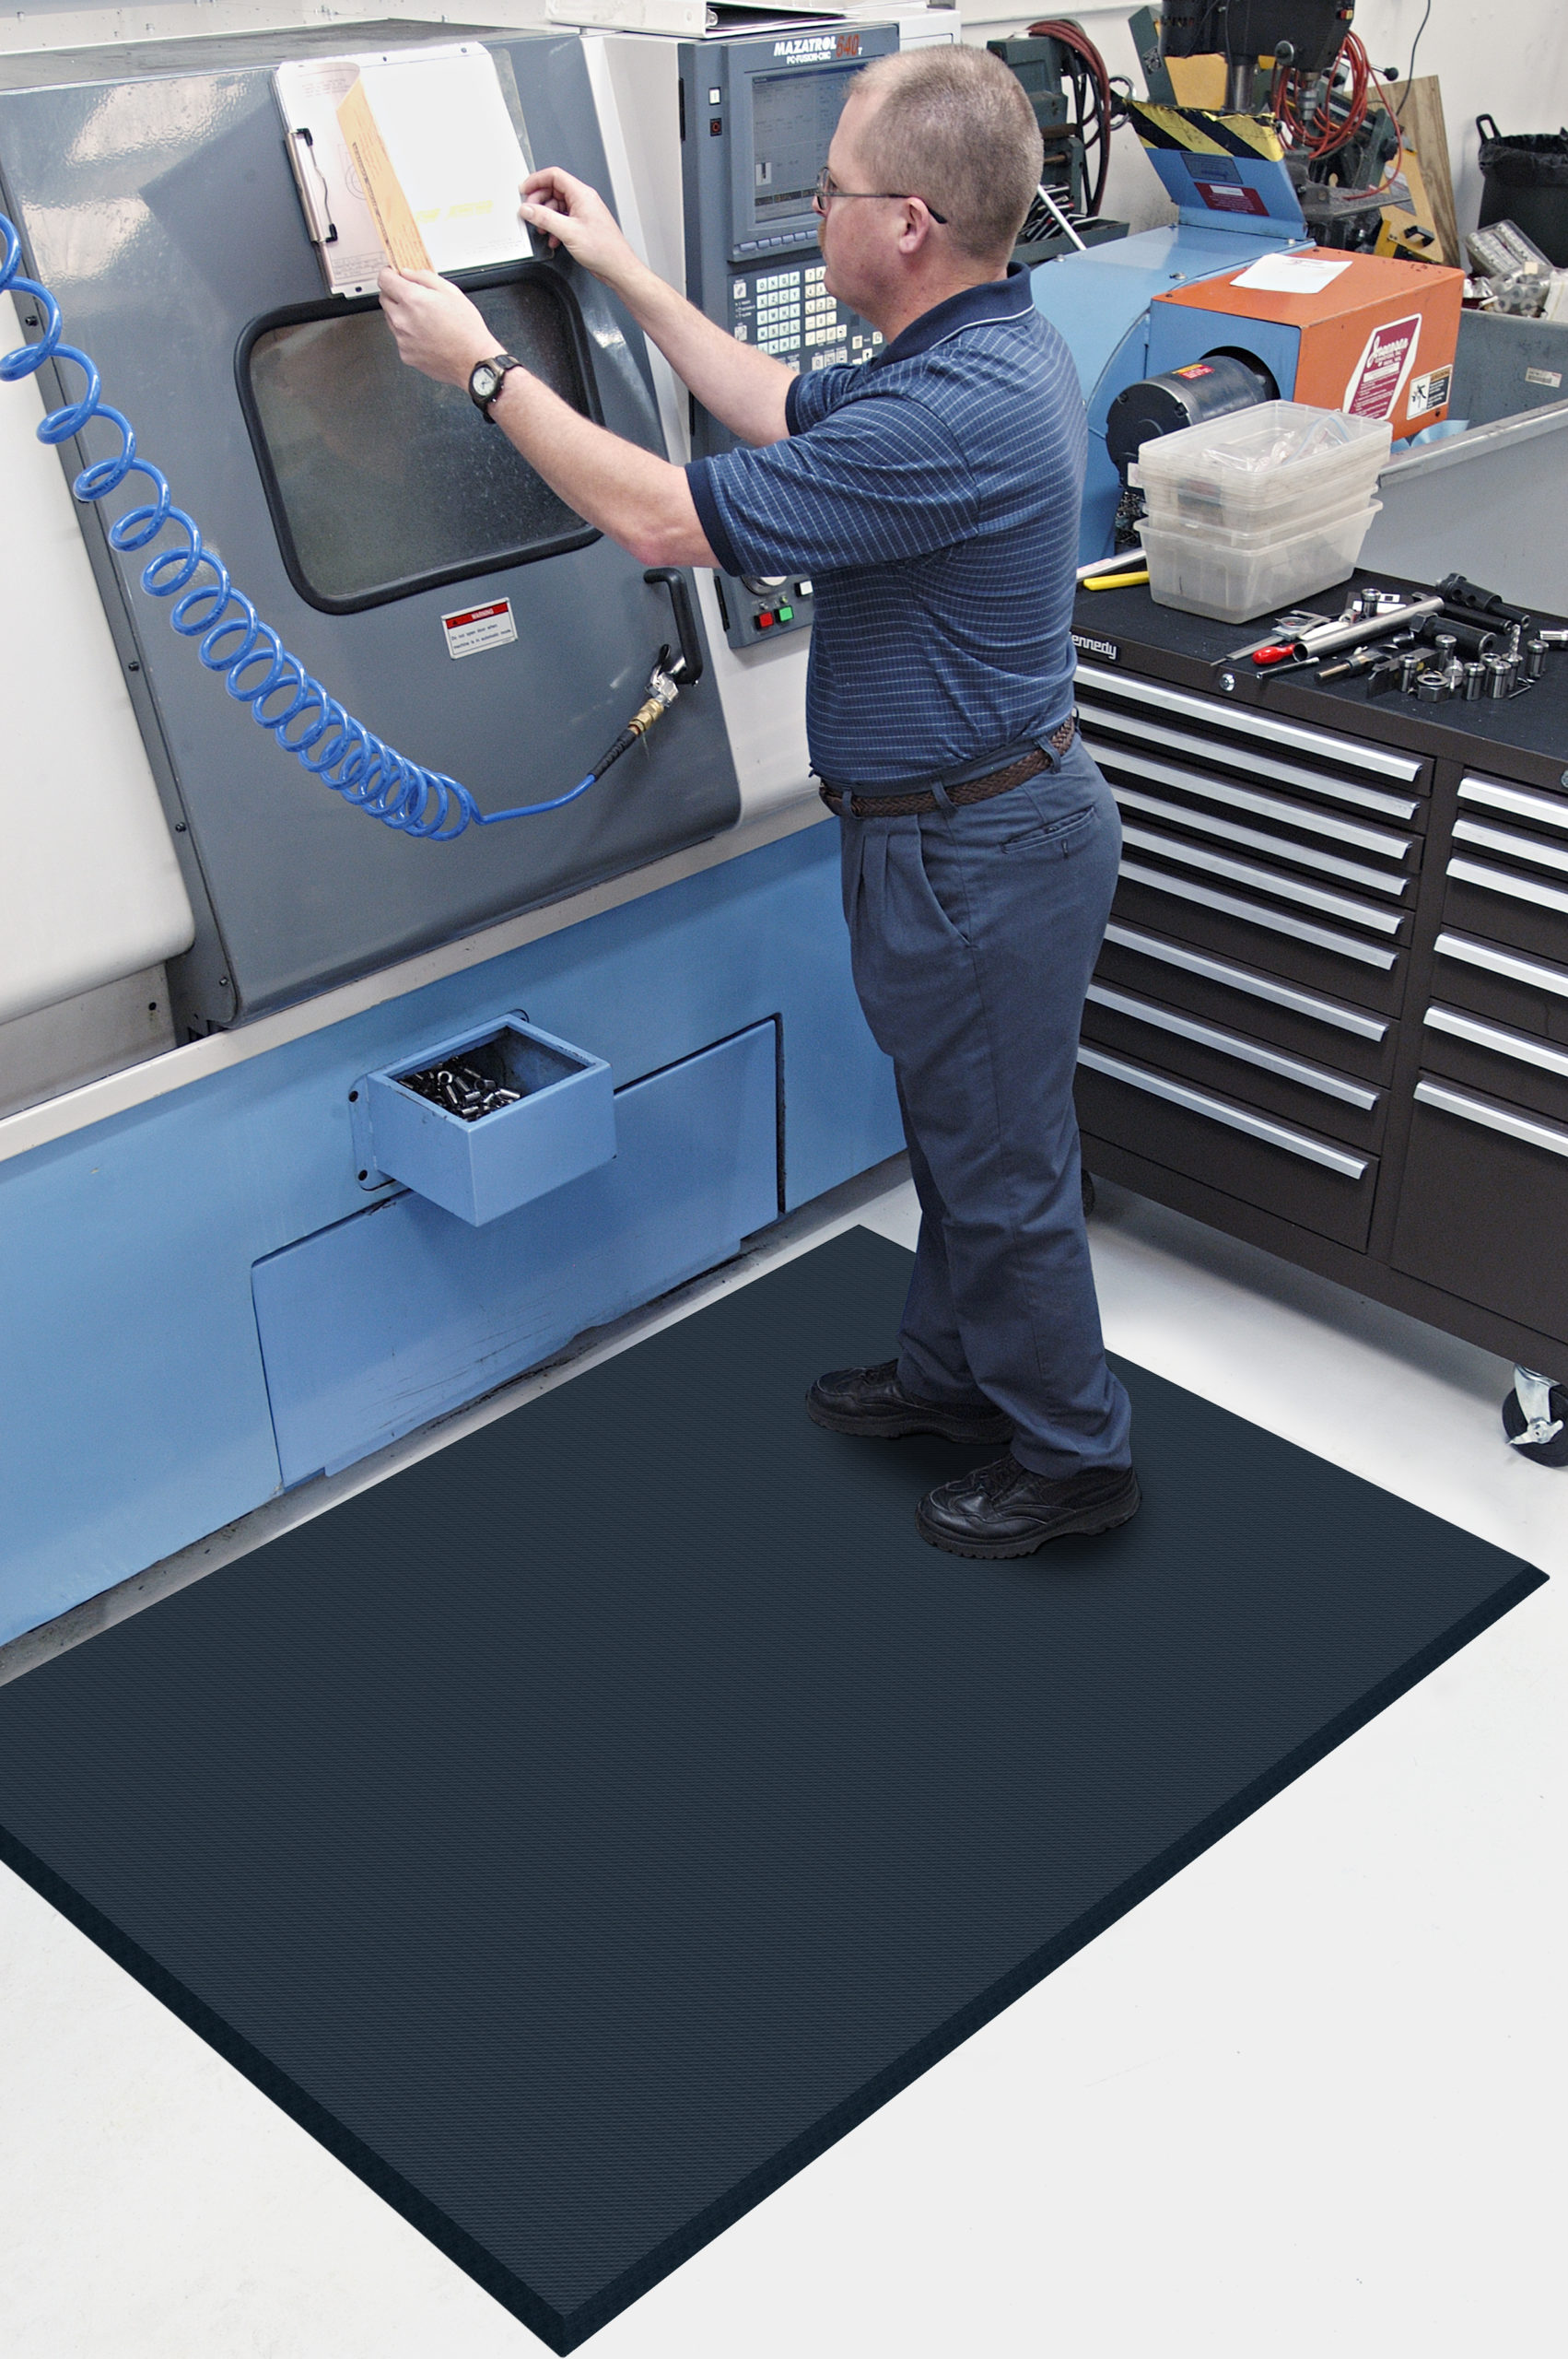 Anti-Fatigue Mats - Anti-Fatigue Floor Mat Service